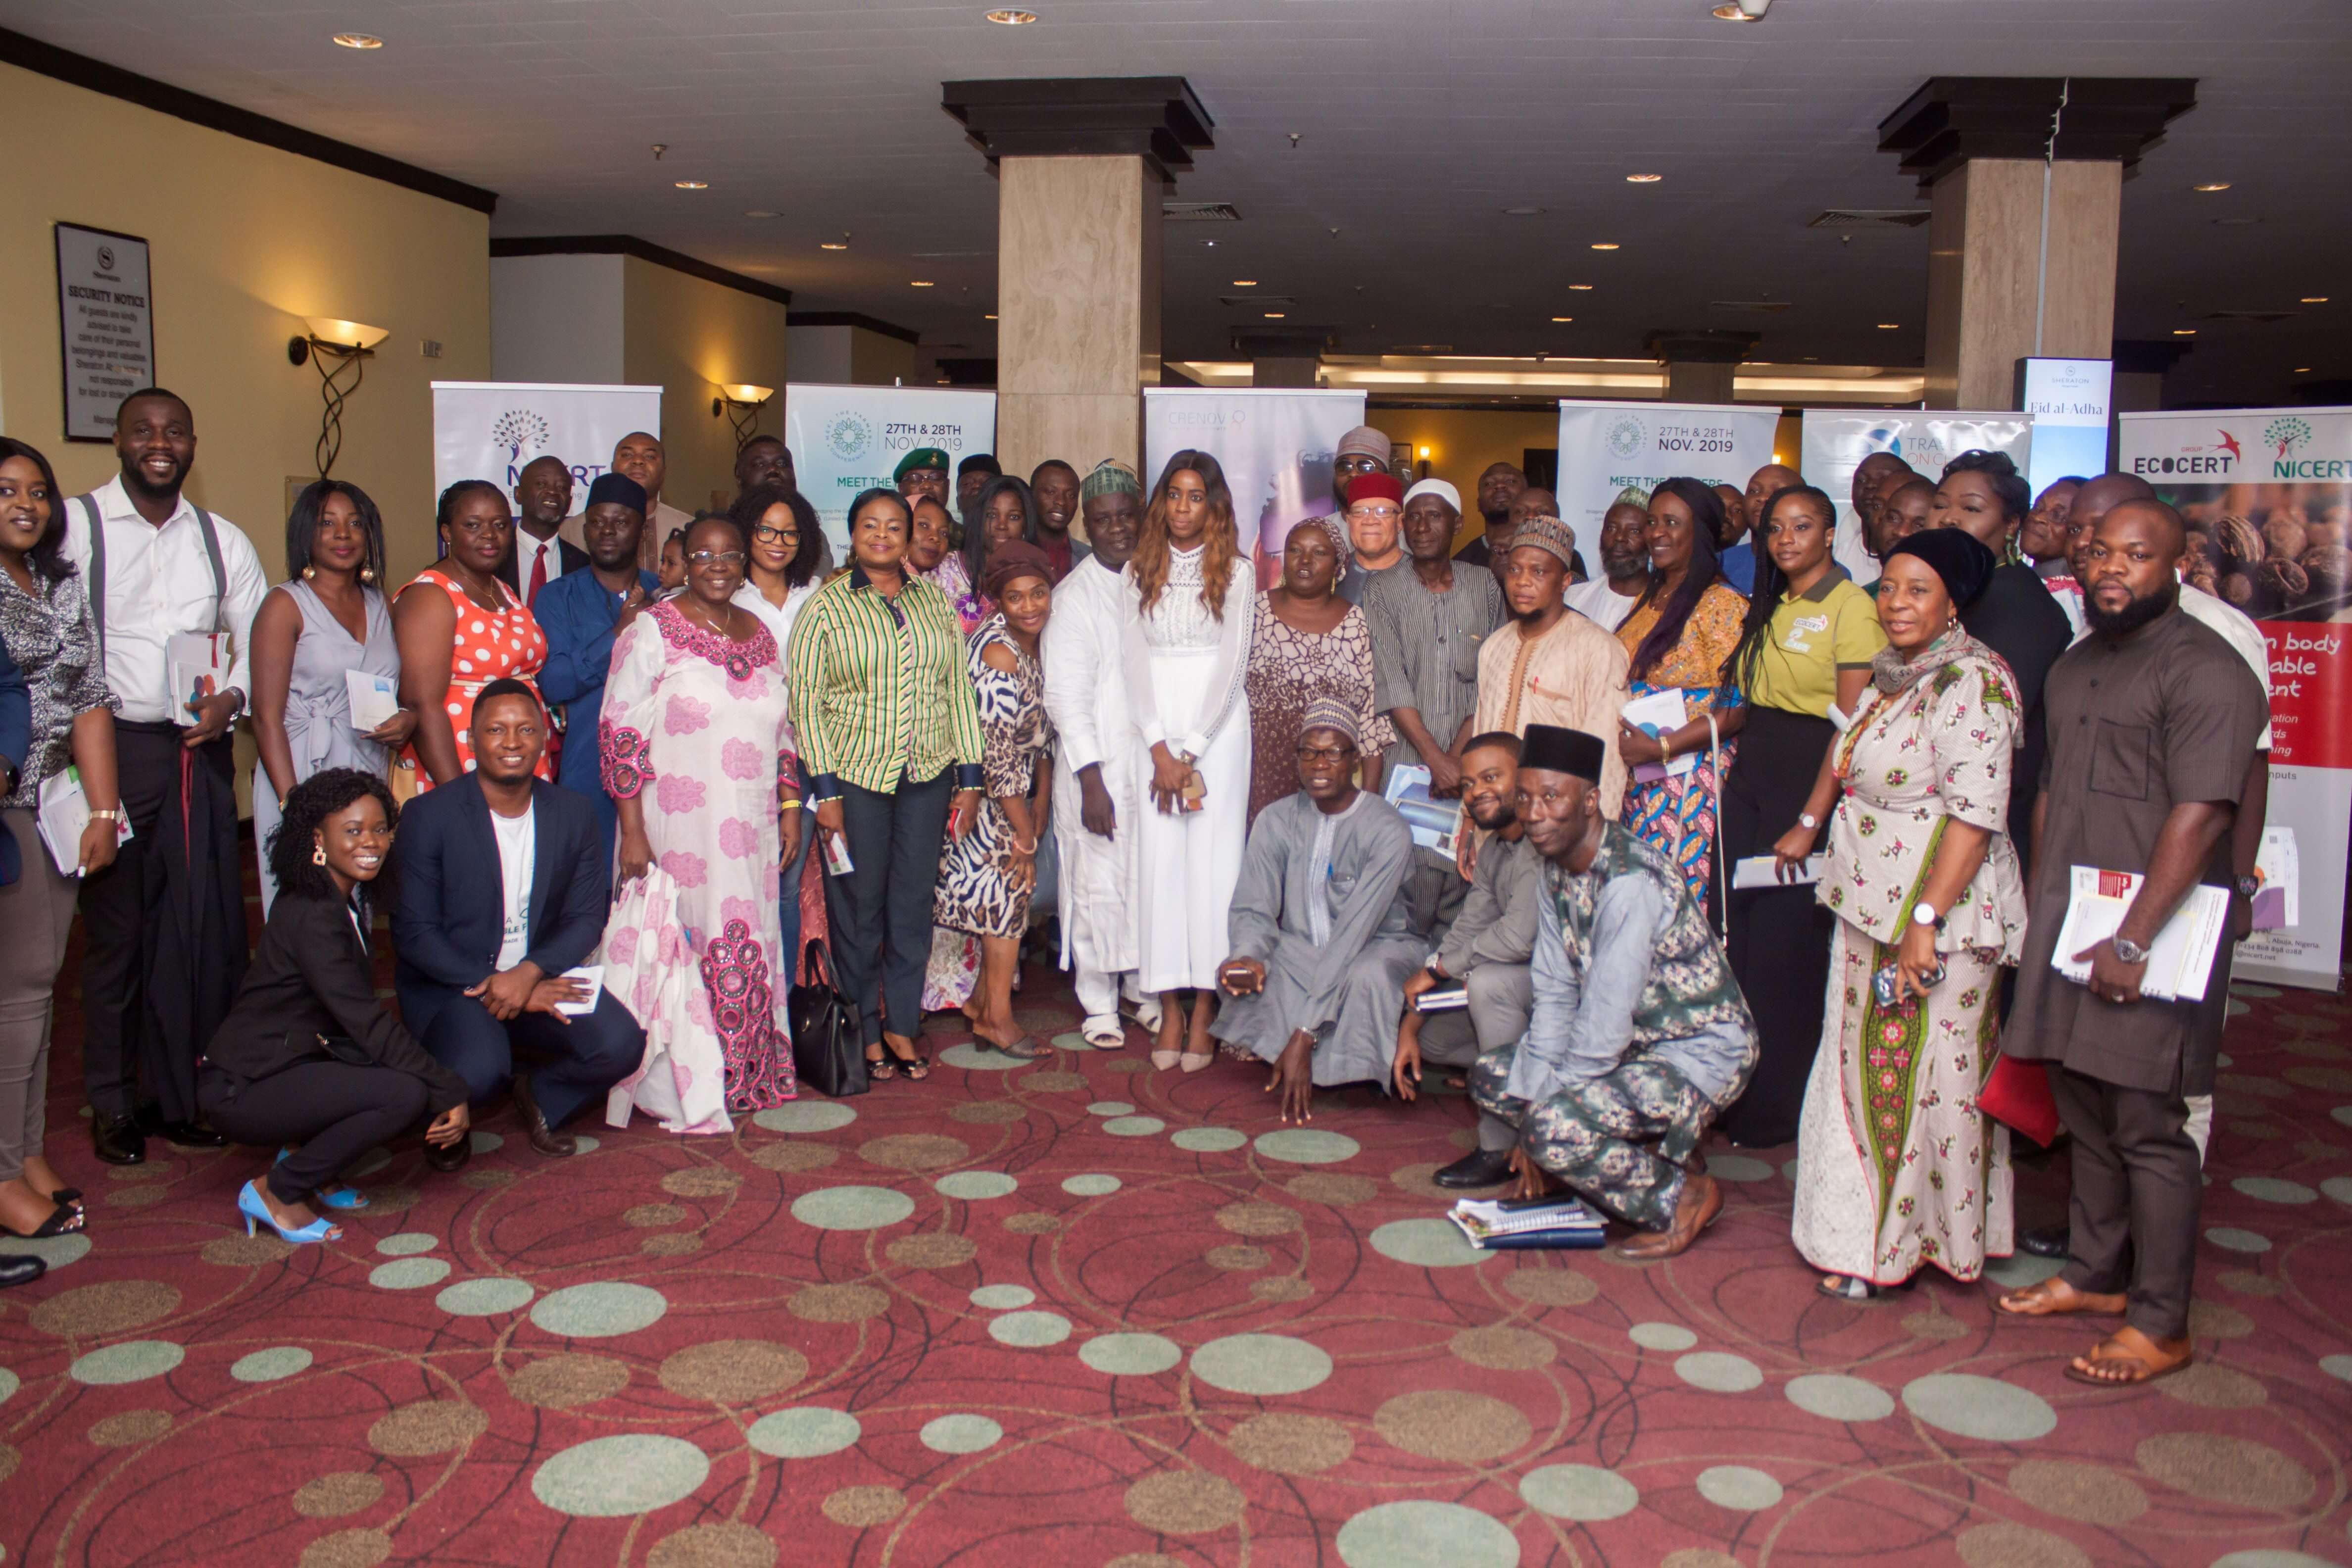 Crenov8 Hosts MTFC Media Launch Event in Abuja Nigeria